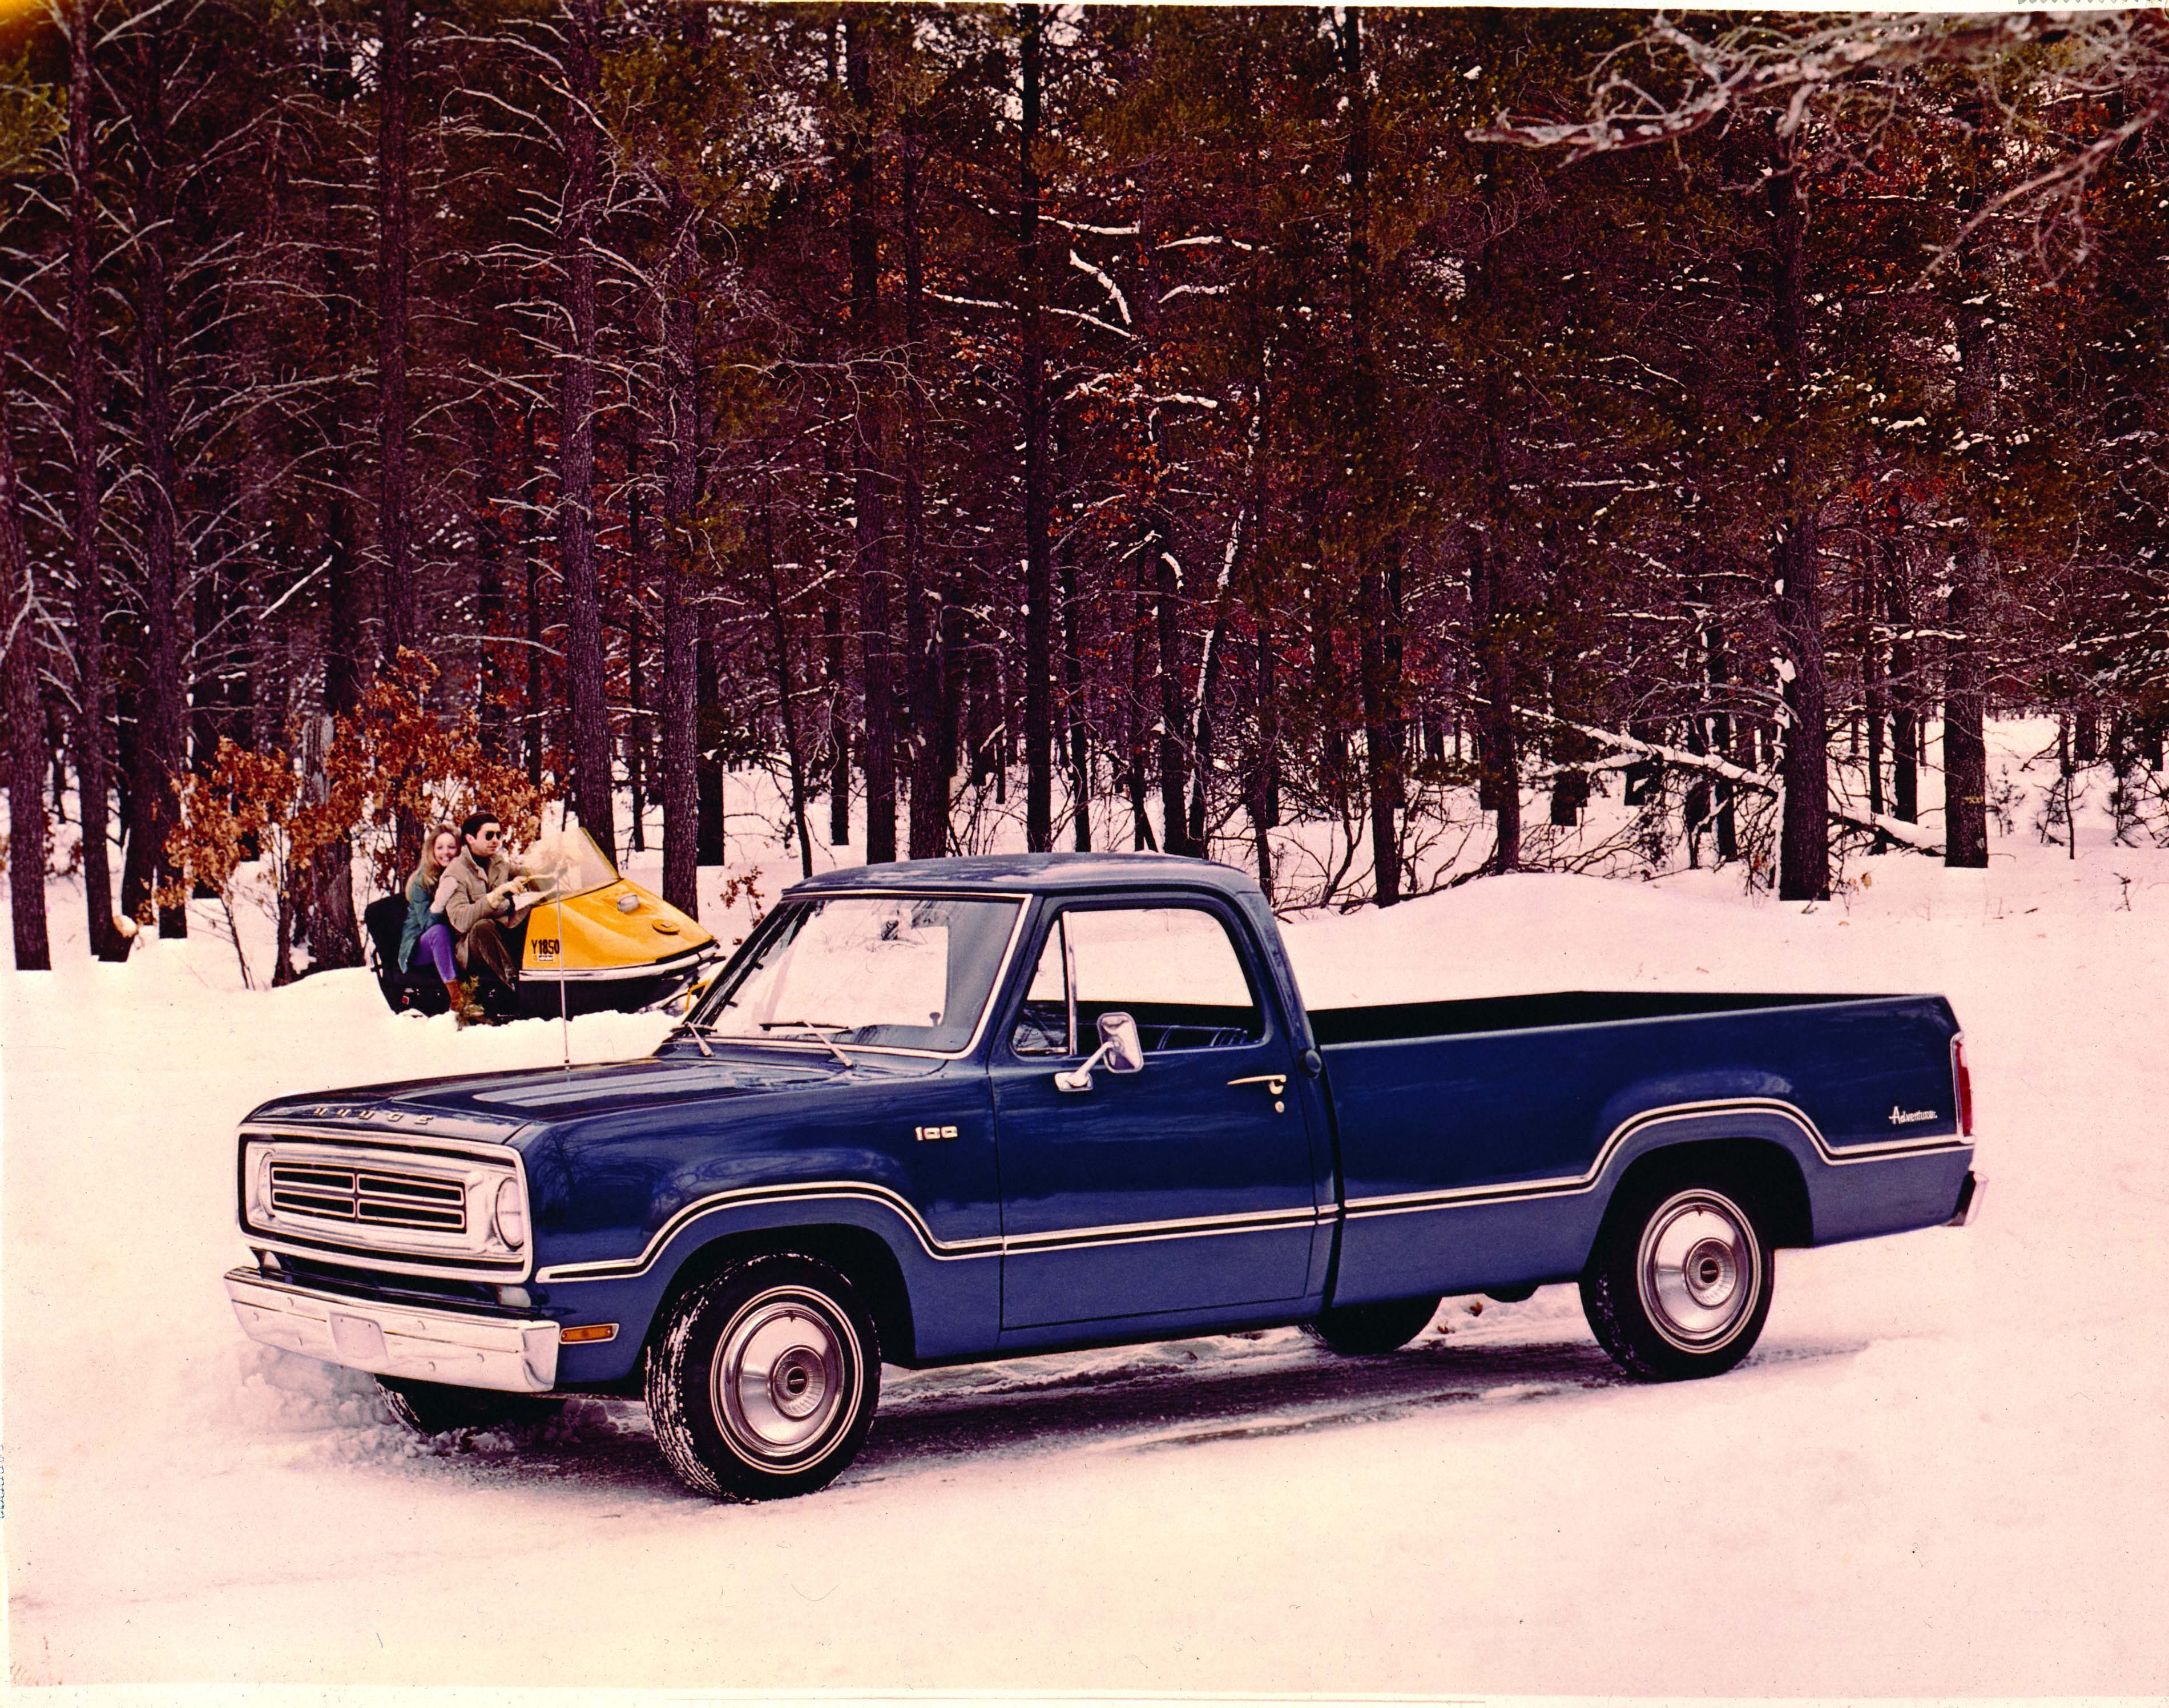 1972 Dodge Adventurer Pickup Truck | Flickr - Photo Sharing!